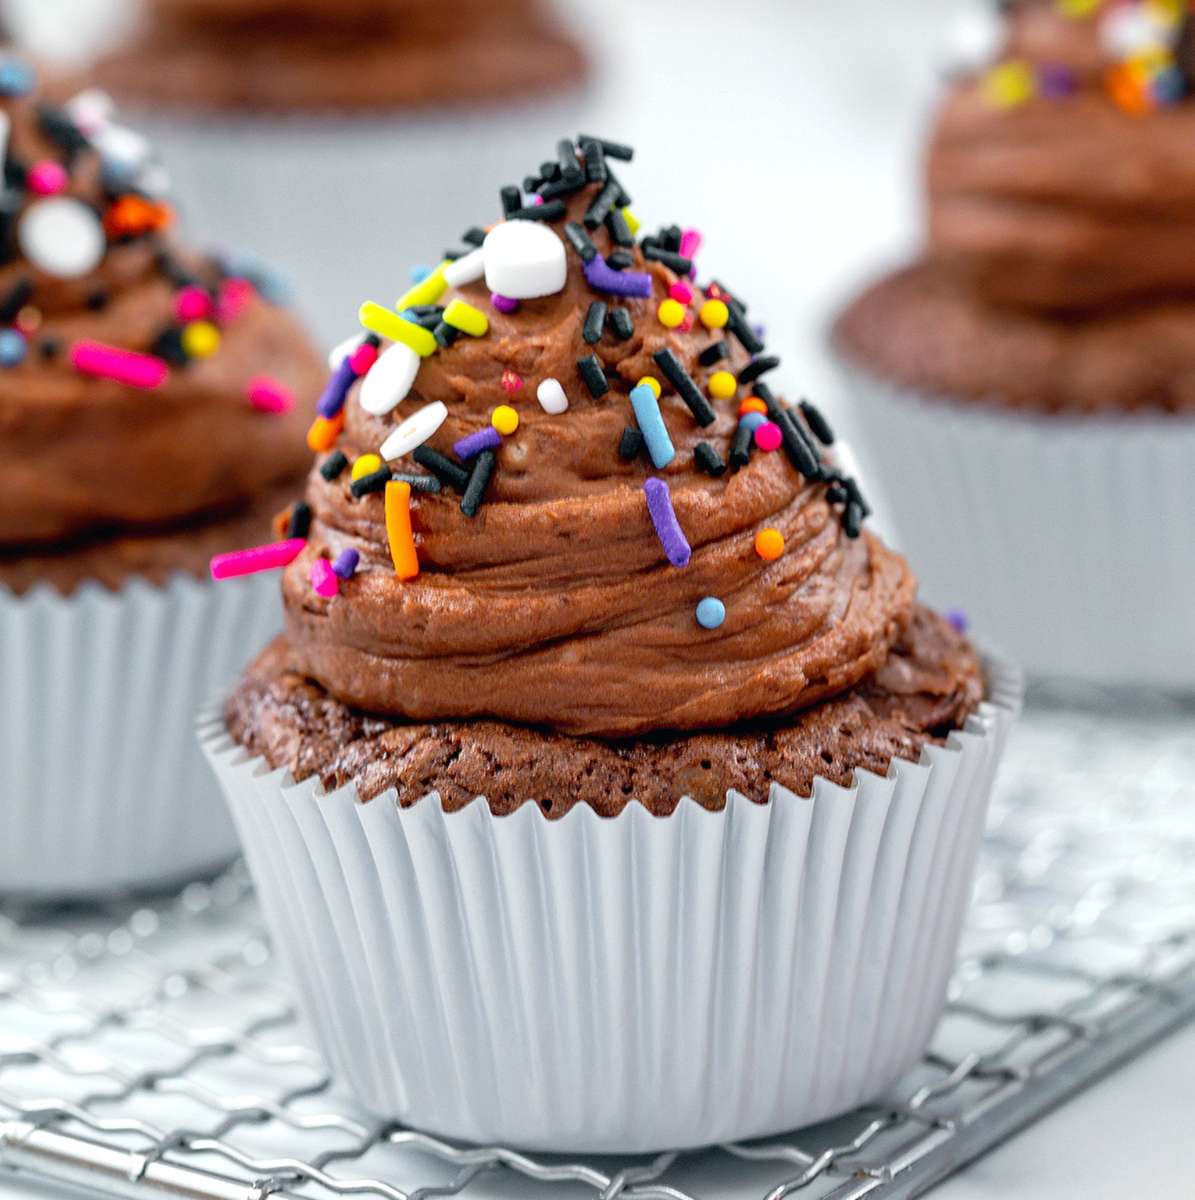 Brownie Mix Cupcakes recept❤️❤️❤️❤️ pussel på nätet